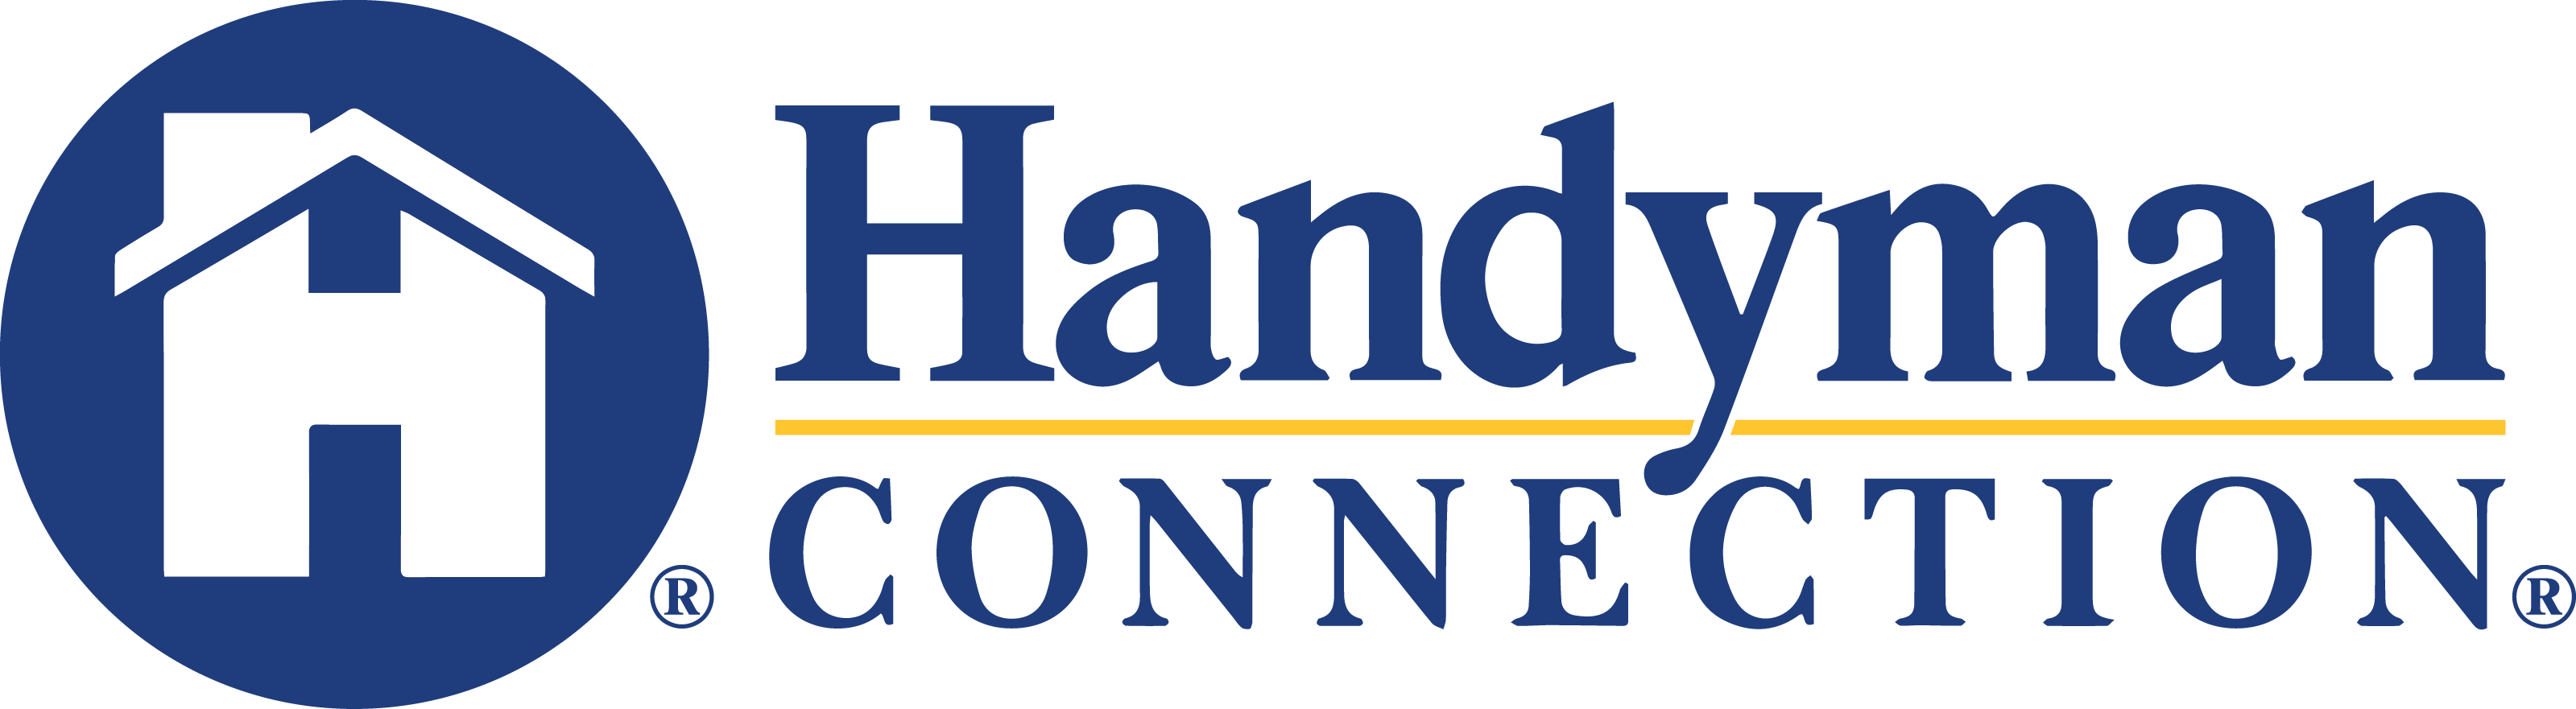 https://handymanconnection.com/lincoln/wp-content/uploads/sites/27/2021/05/HandymanConnection-logo-2-1.png